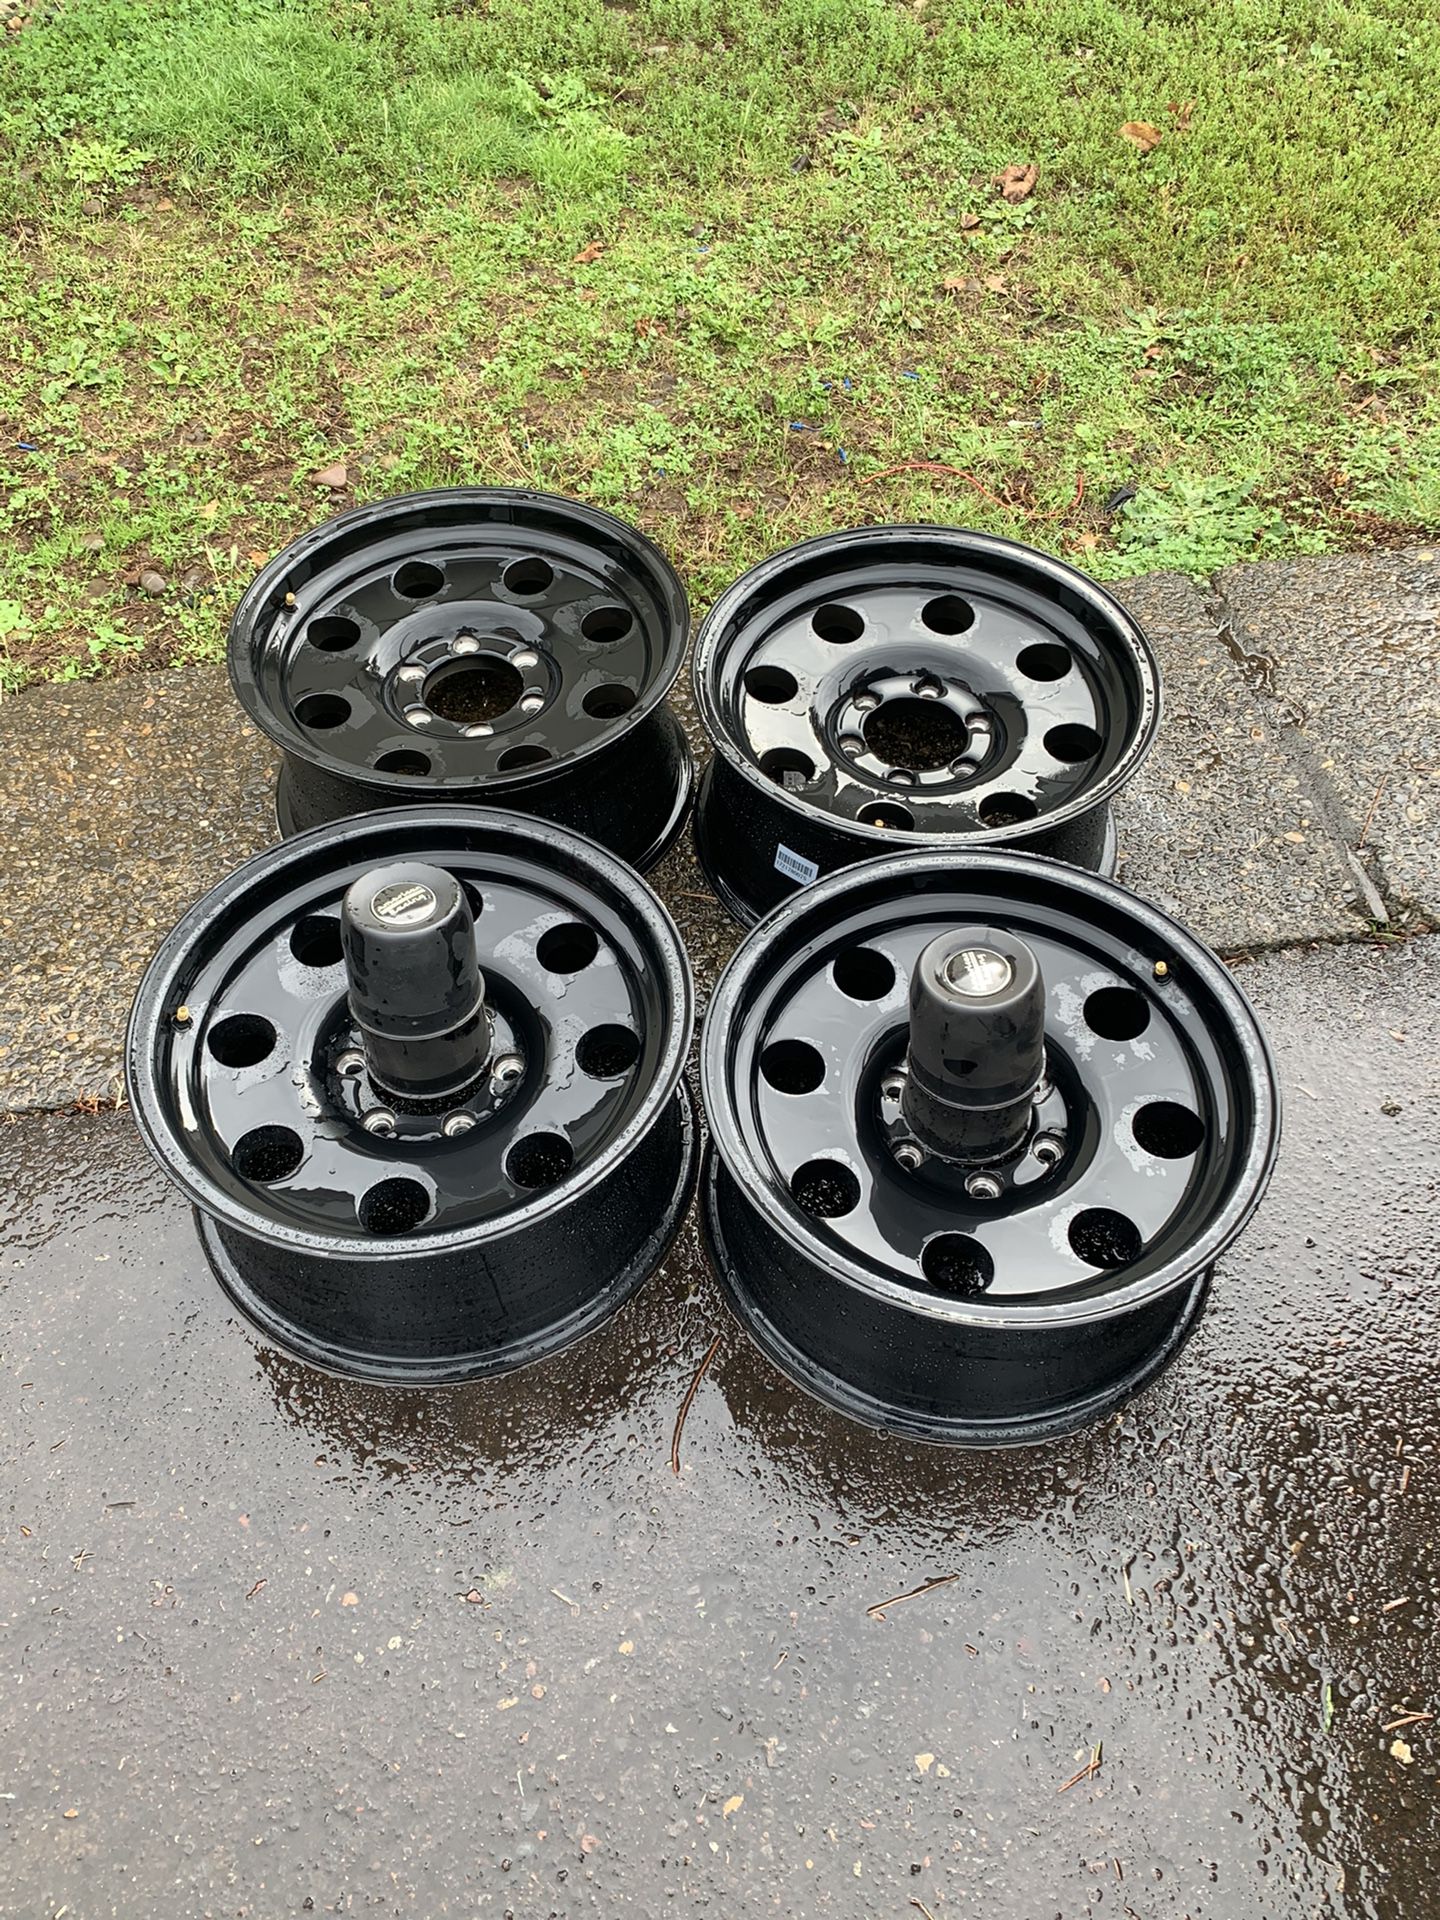 17” Chevy black (rims) wheels